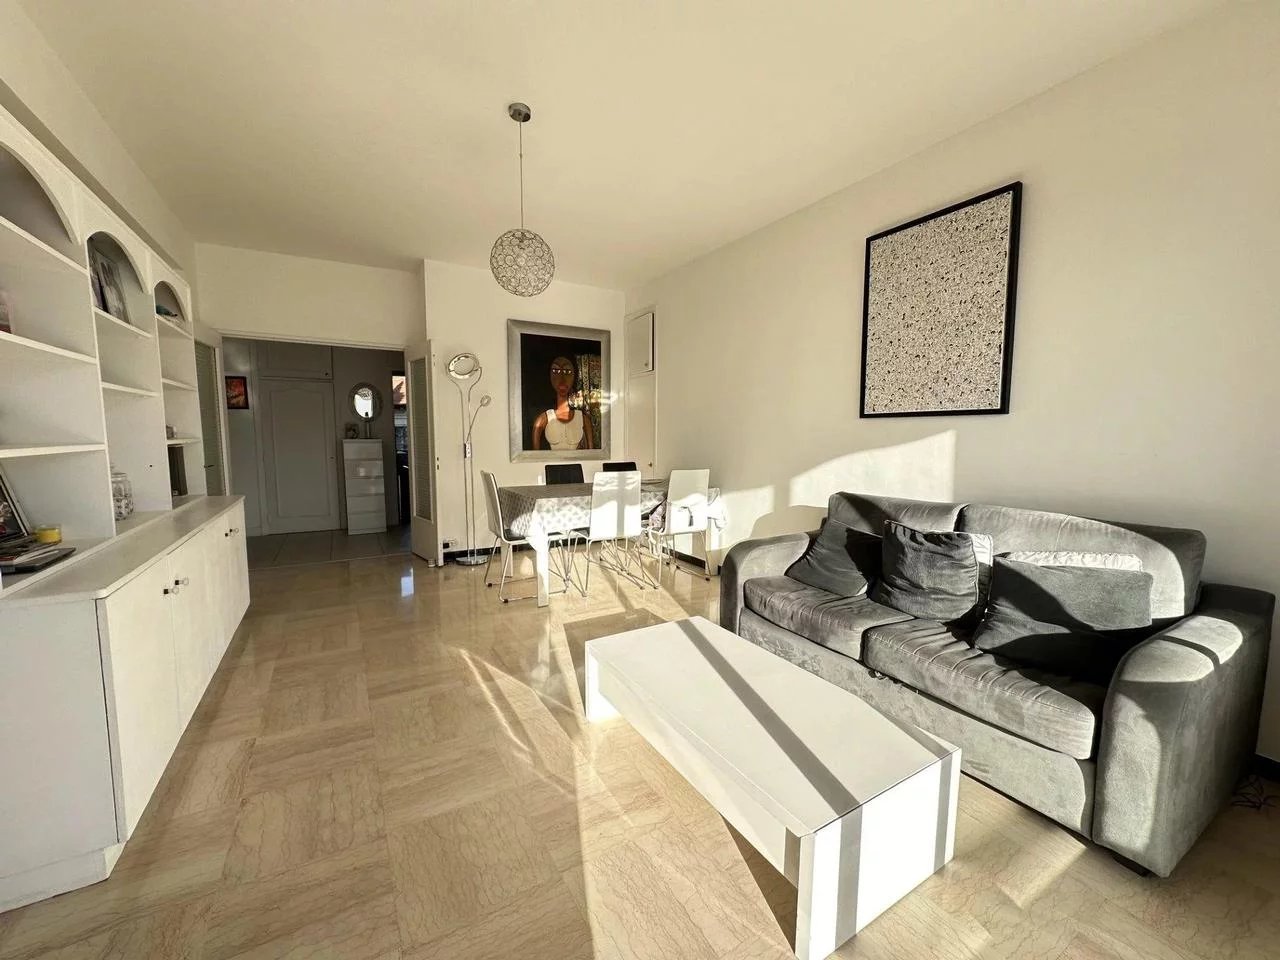 Appartement  3 Locali 75.08m2  In vendita   499 000 €